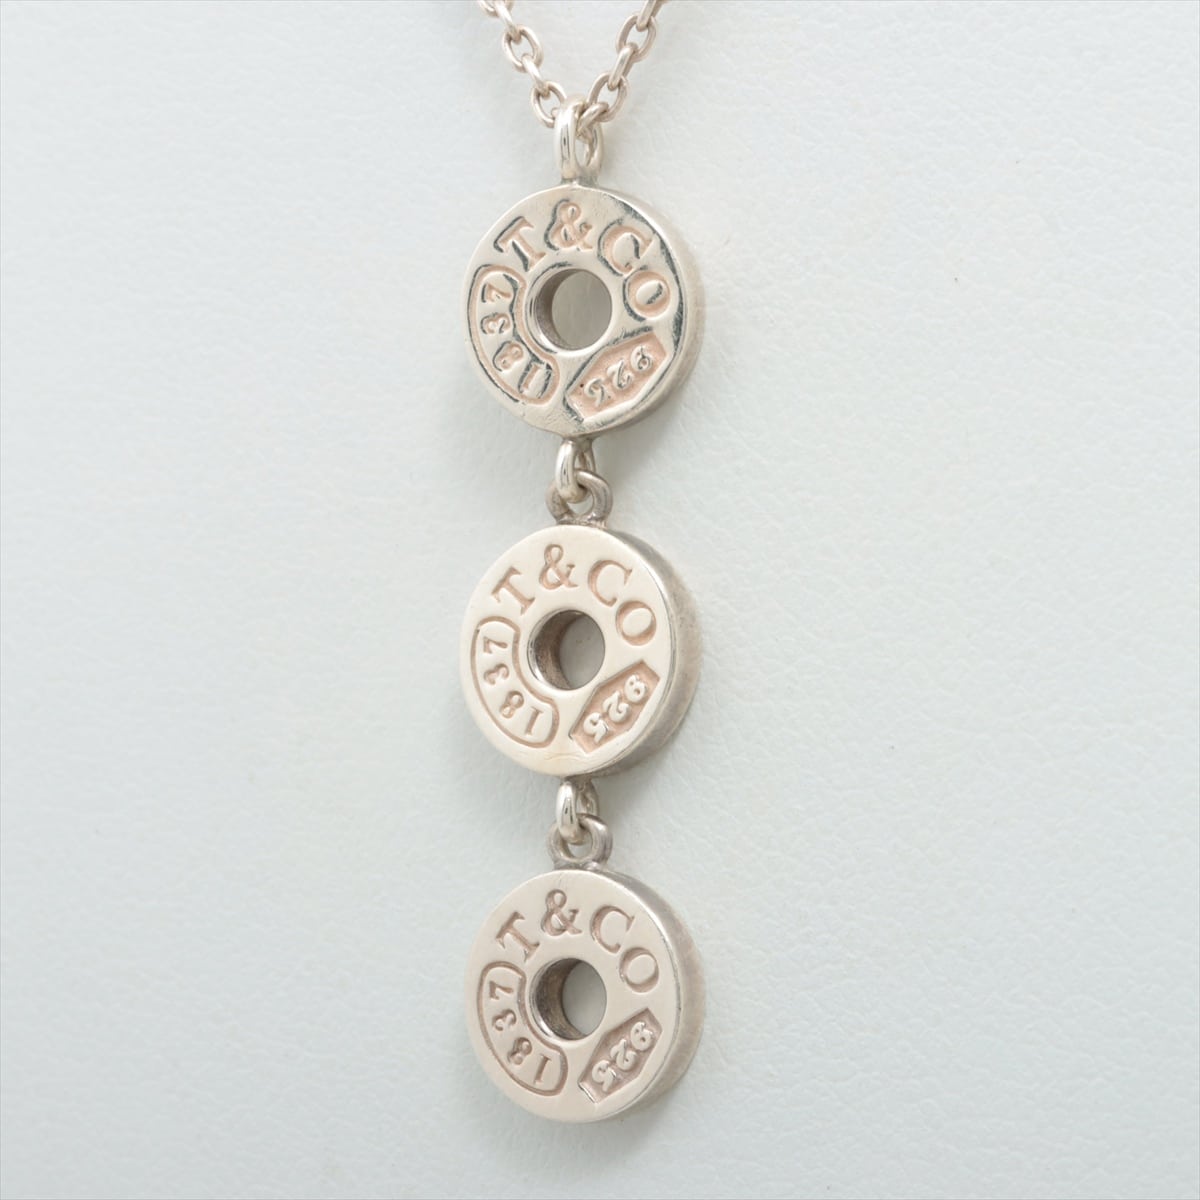 Tiffany 1837 three drop circle pendant Necklace 925 5.5g Silver